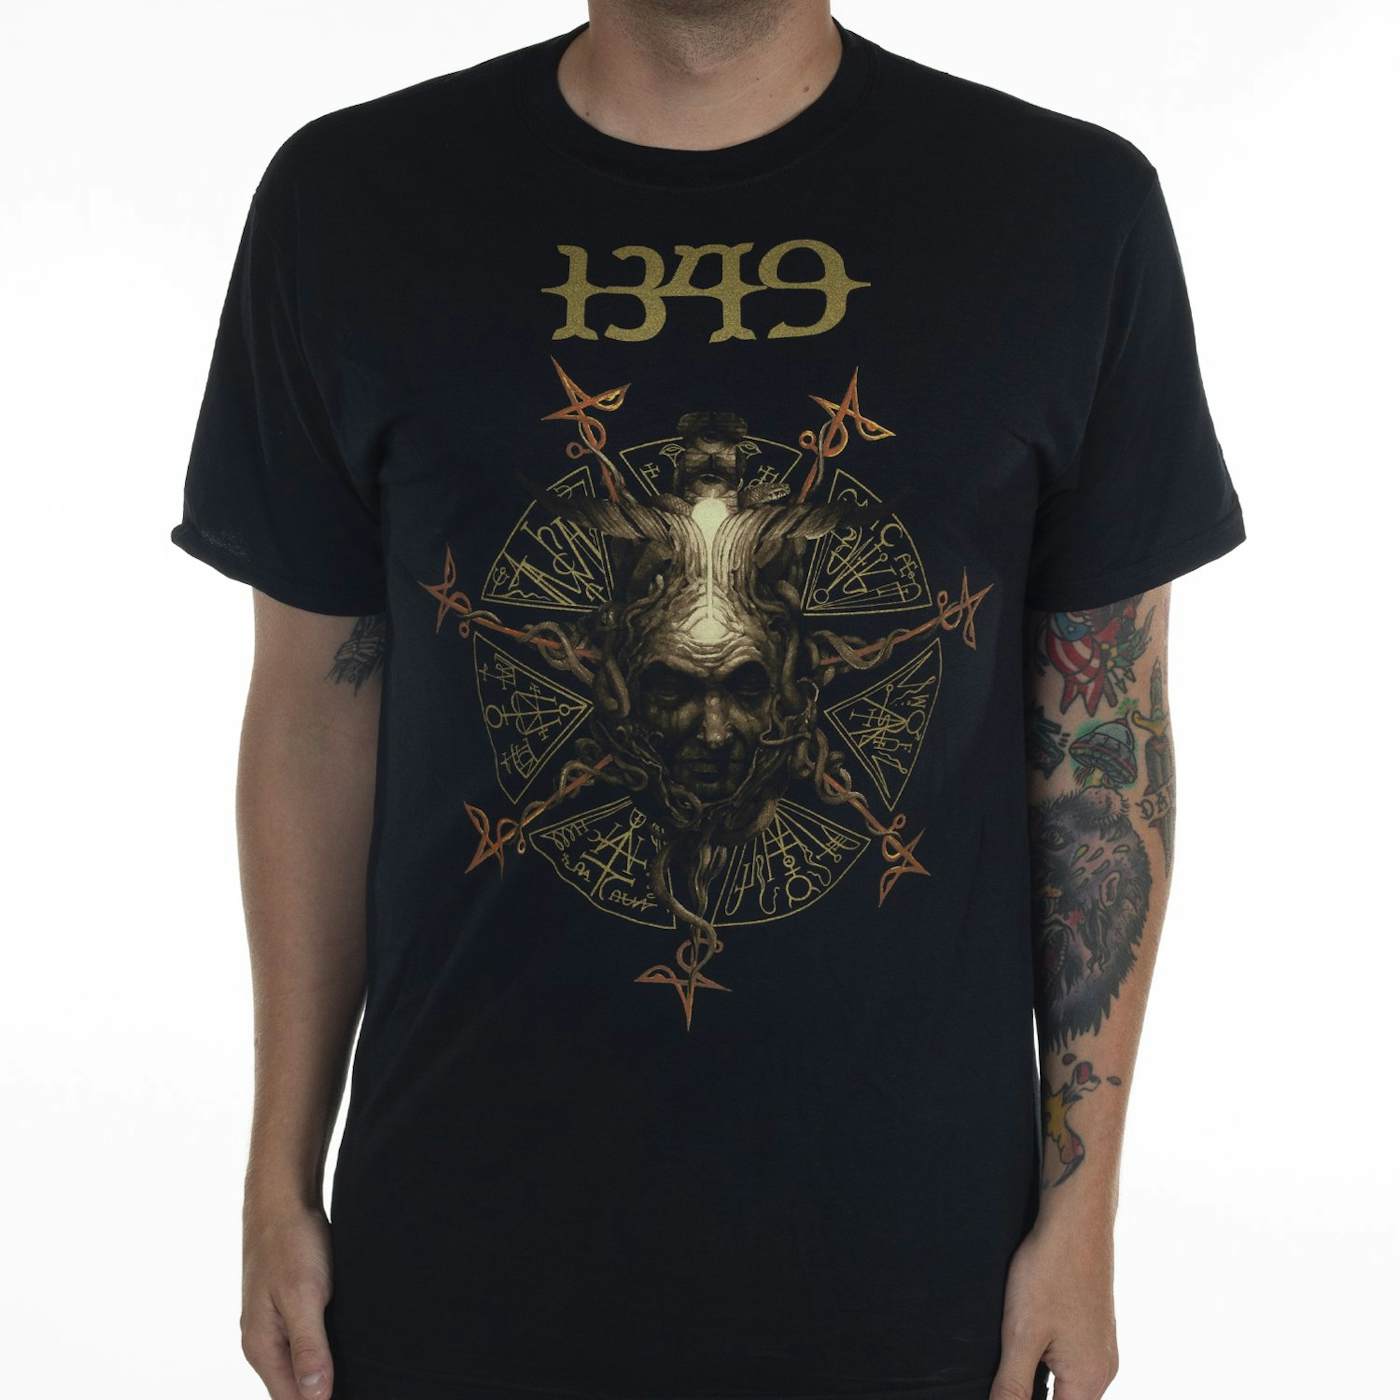 1349 "Through Eyes Of Stone" T-Shirt